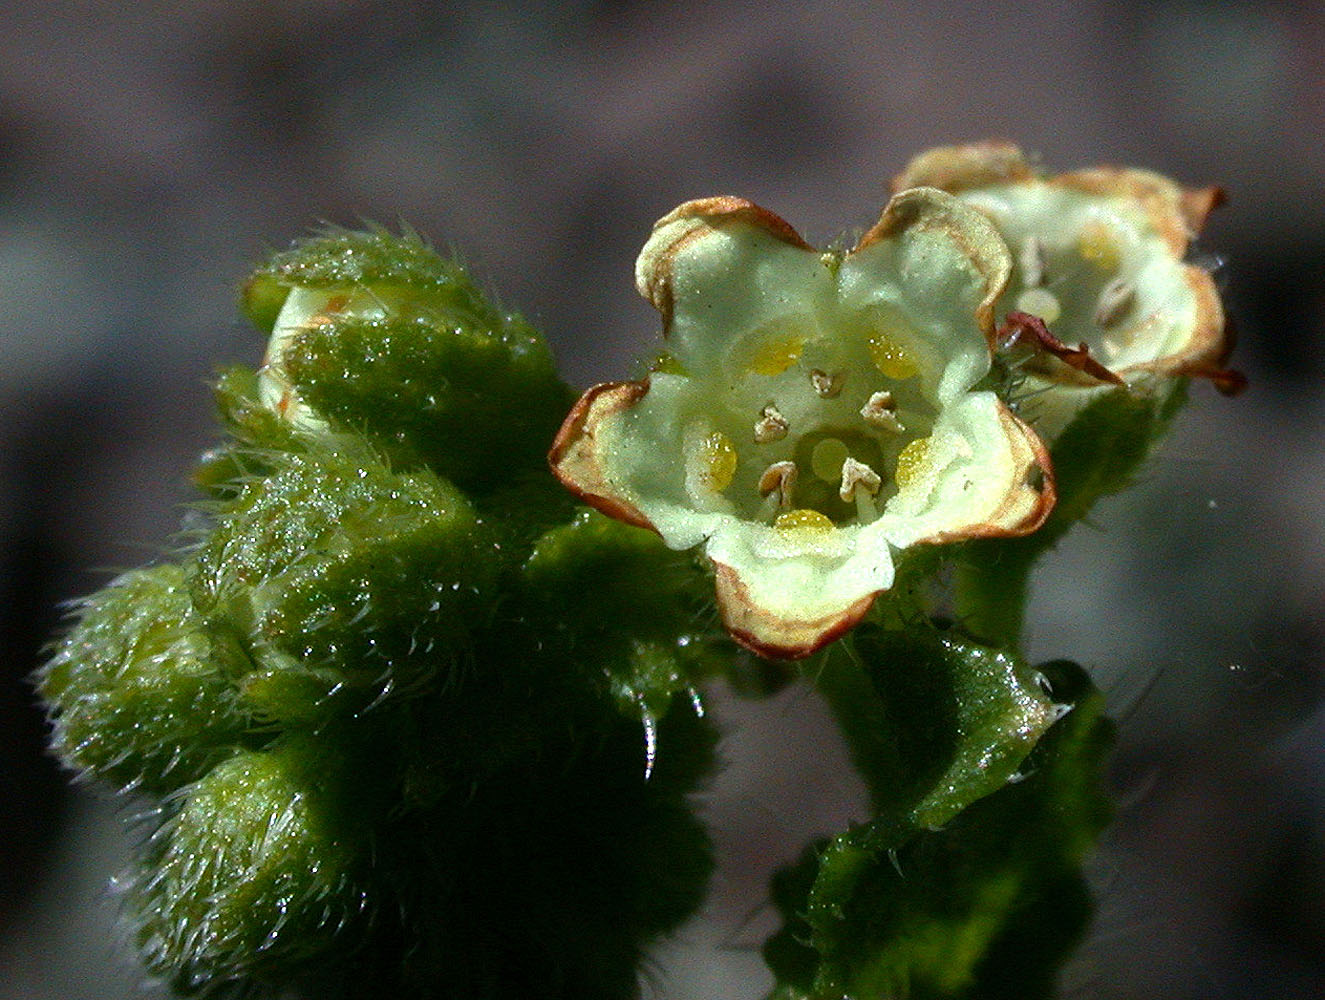 Flora of Eastern Washington Image: Hackelia hispida disjuncta